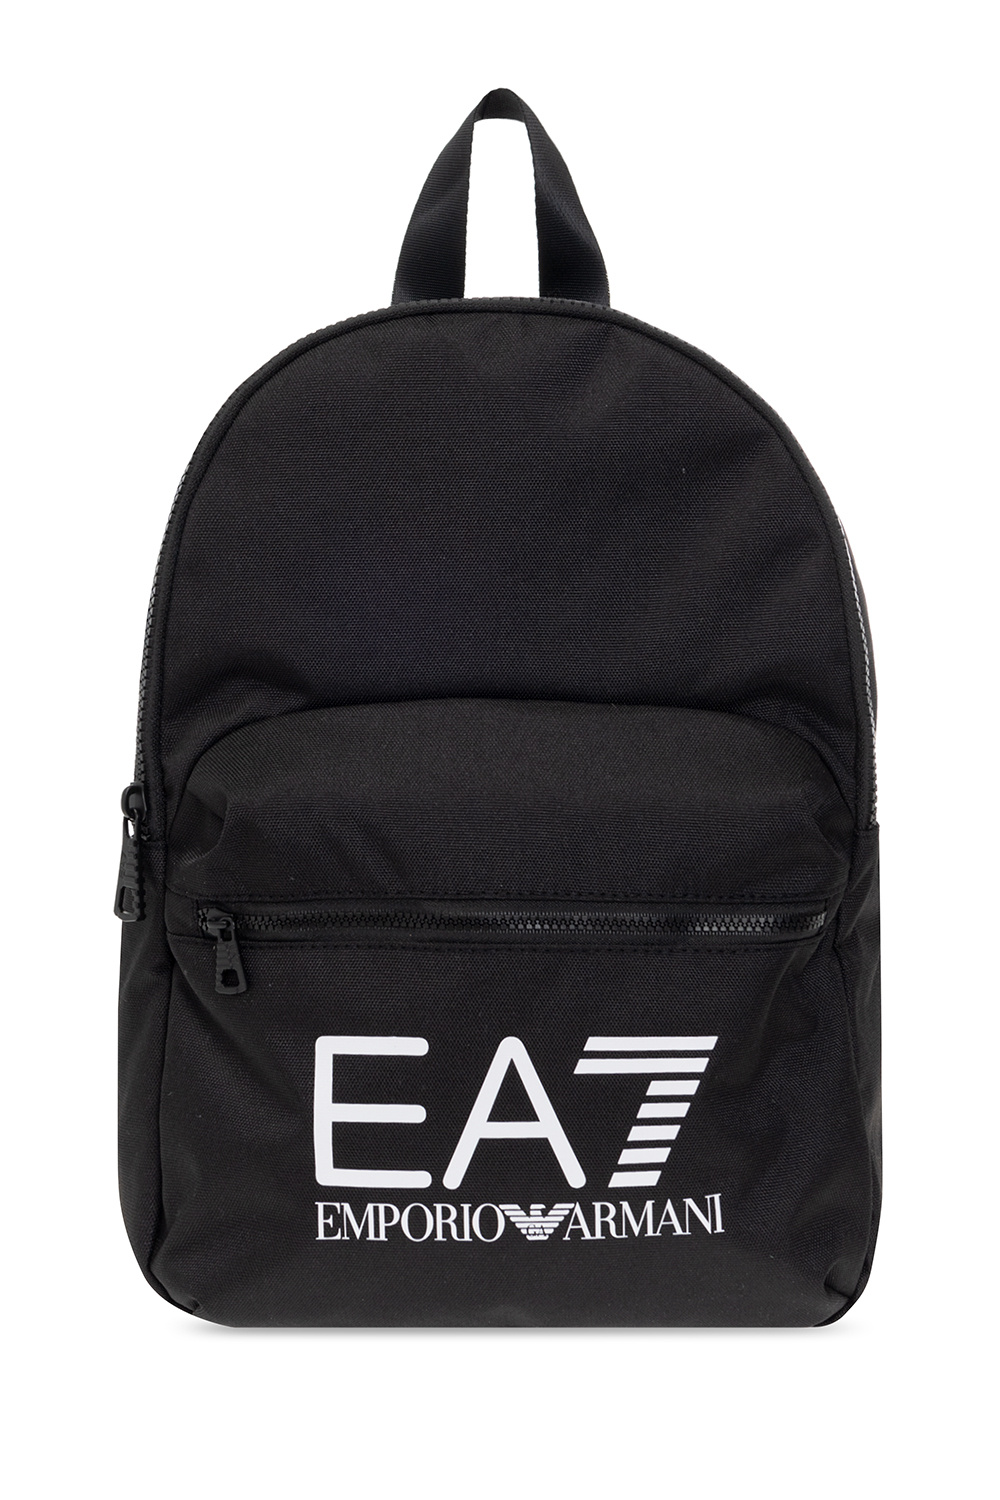 EA7 Emporio Armani Il n'y a pas d'avis disponible pour Emporio Armani CC717-PACK DE 3